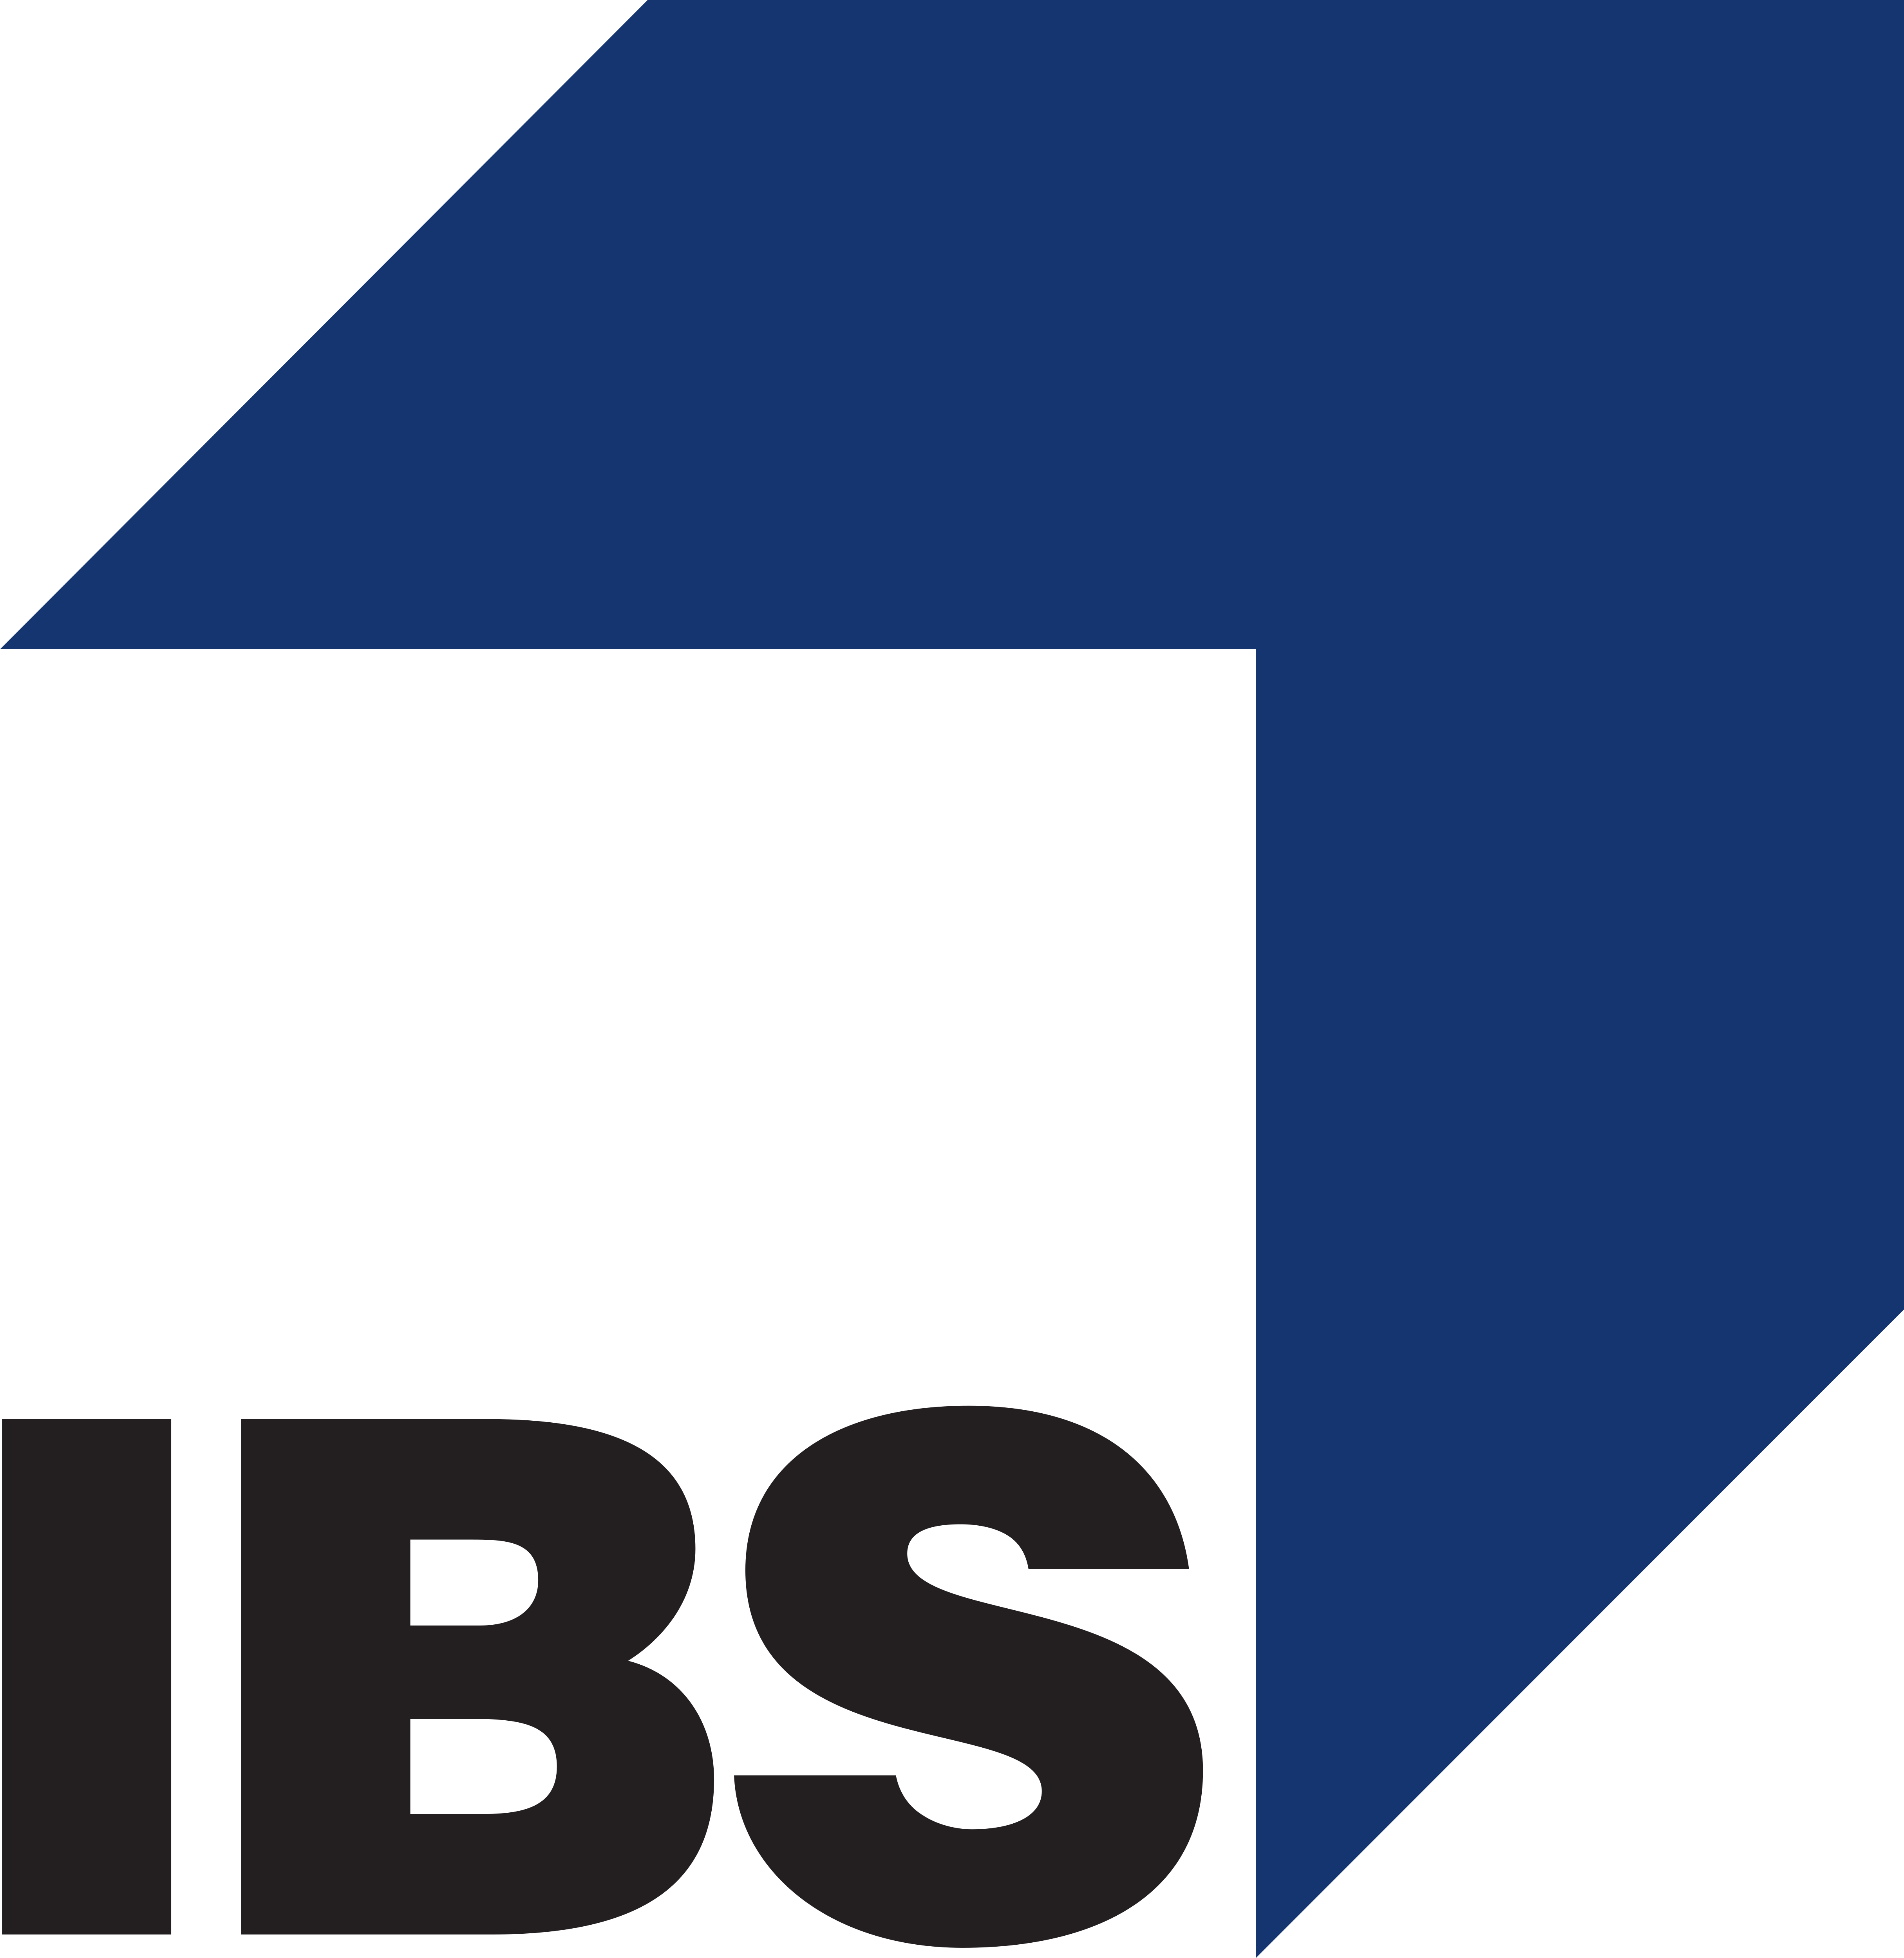 Ibs data. IBS компания. Эмблема IBS. IBS Platformix логотип. IBS компания Нижний Новгород.